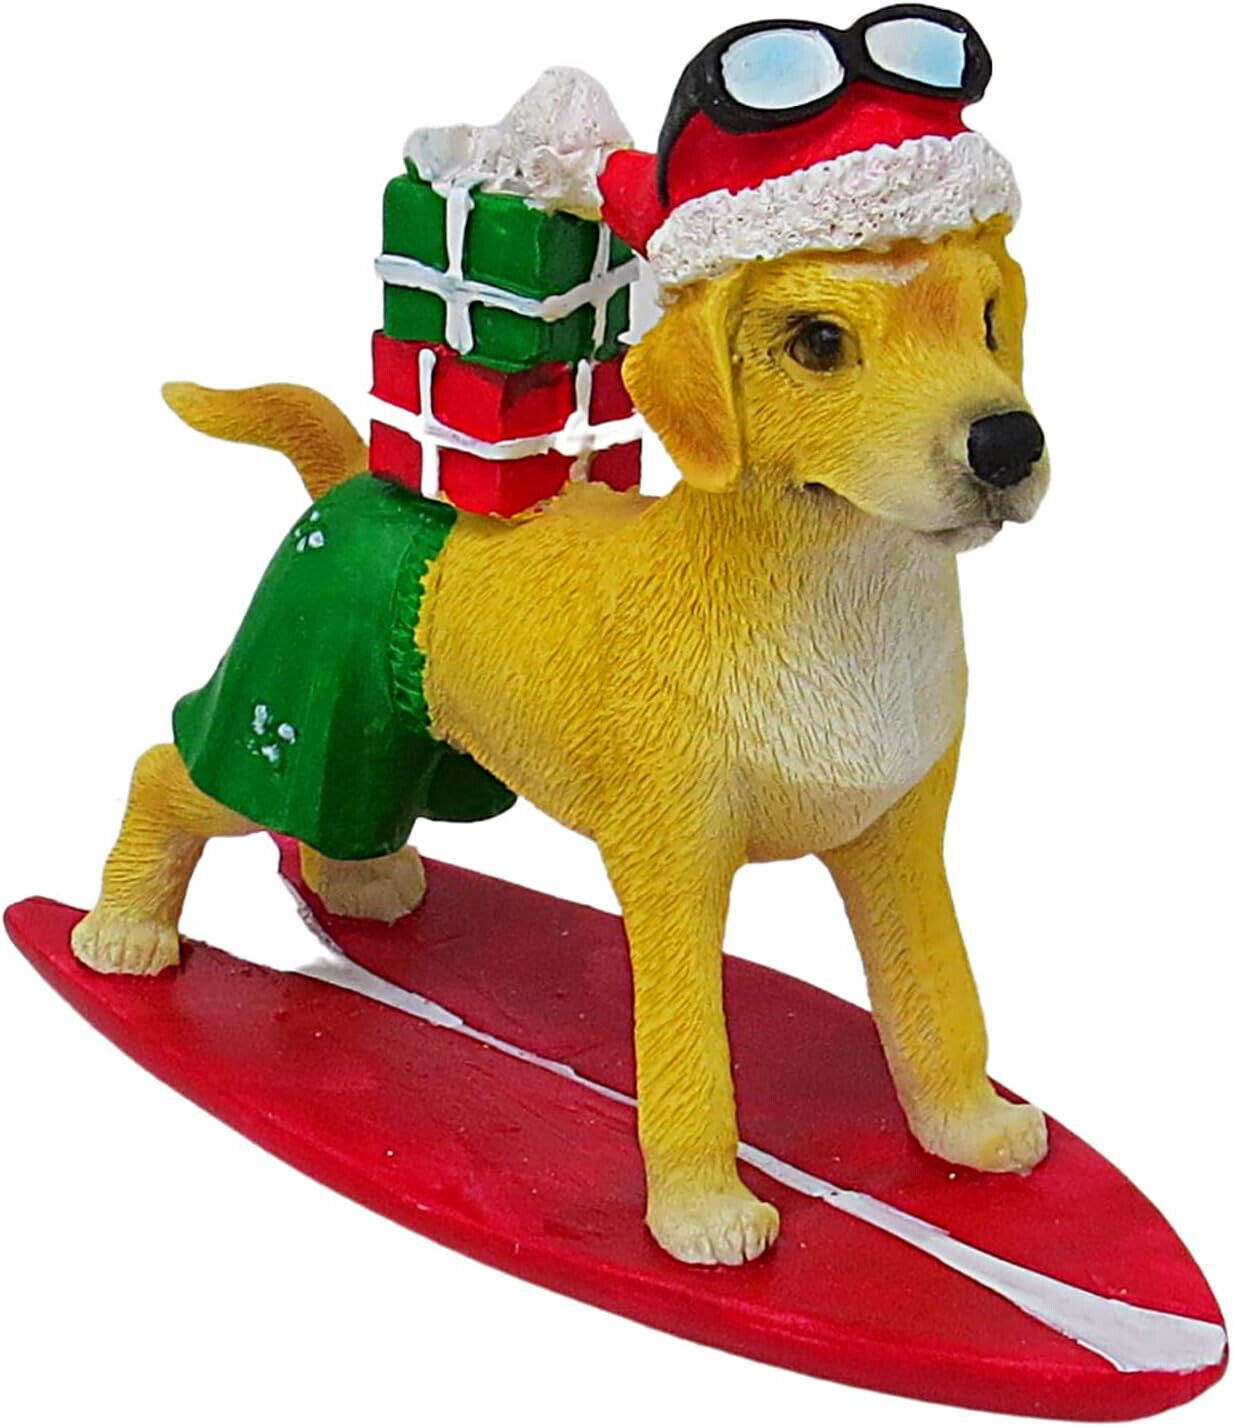 Surfing Golden Retriever Dog Figurine with Santa Hat Delivering